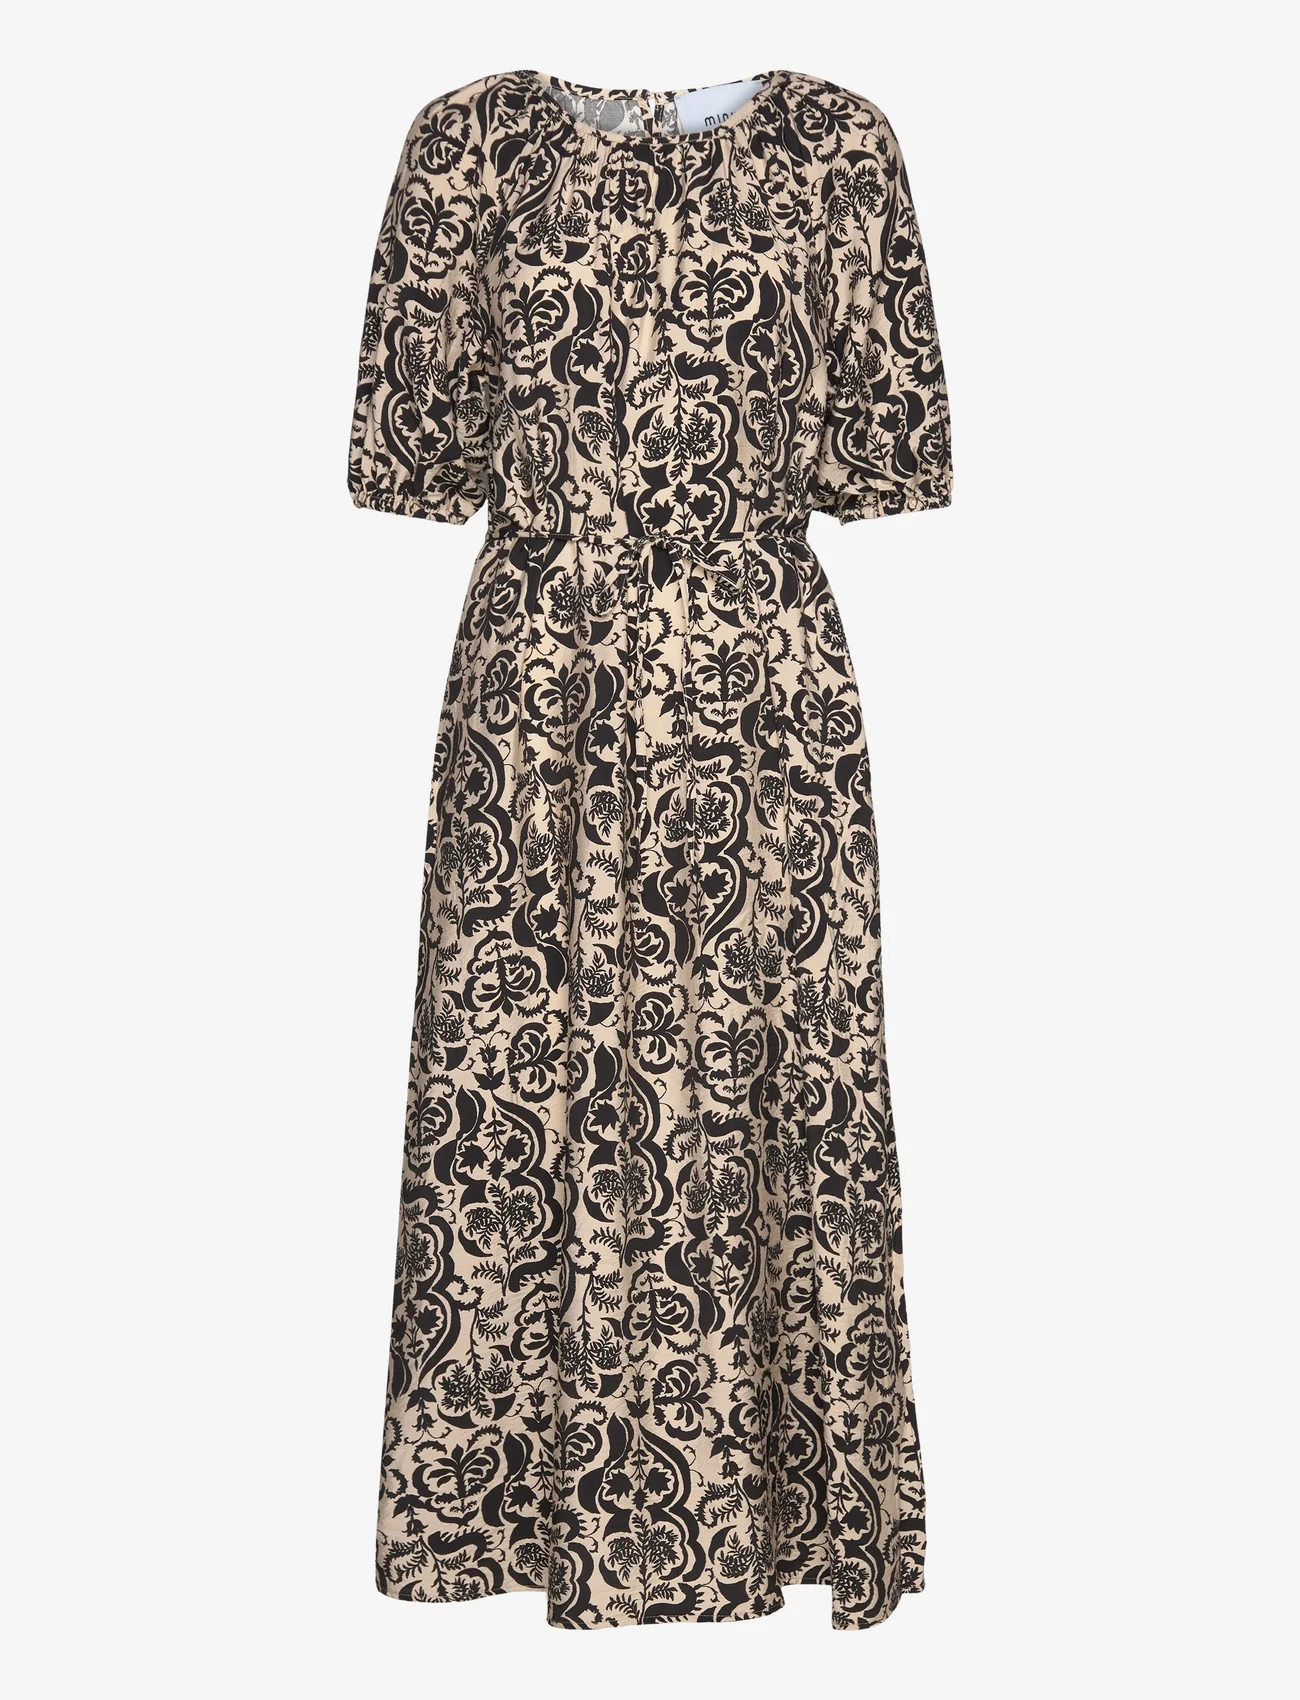 Minus - Lizia Maxi Dress 2 - sand gray print - 1